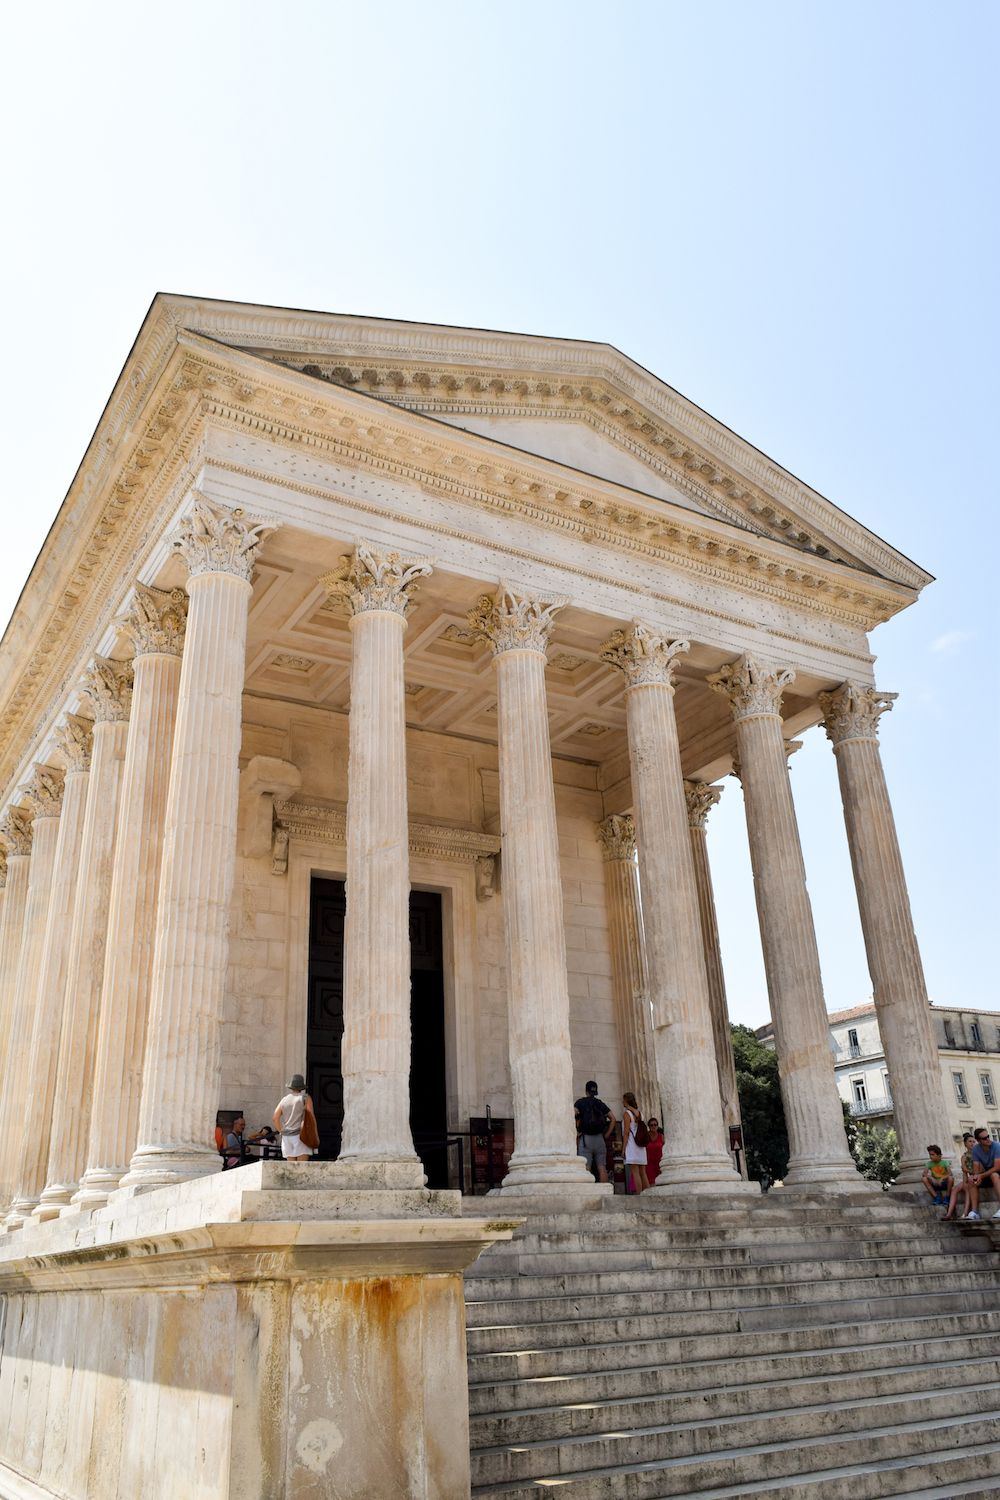 Former Roman Empire in France: Maison Carrée, Nîmes, France